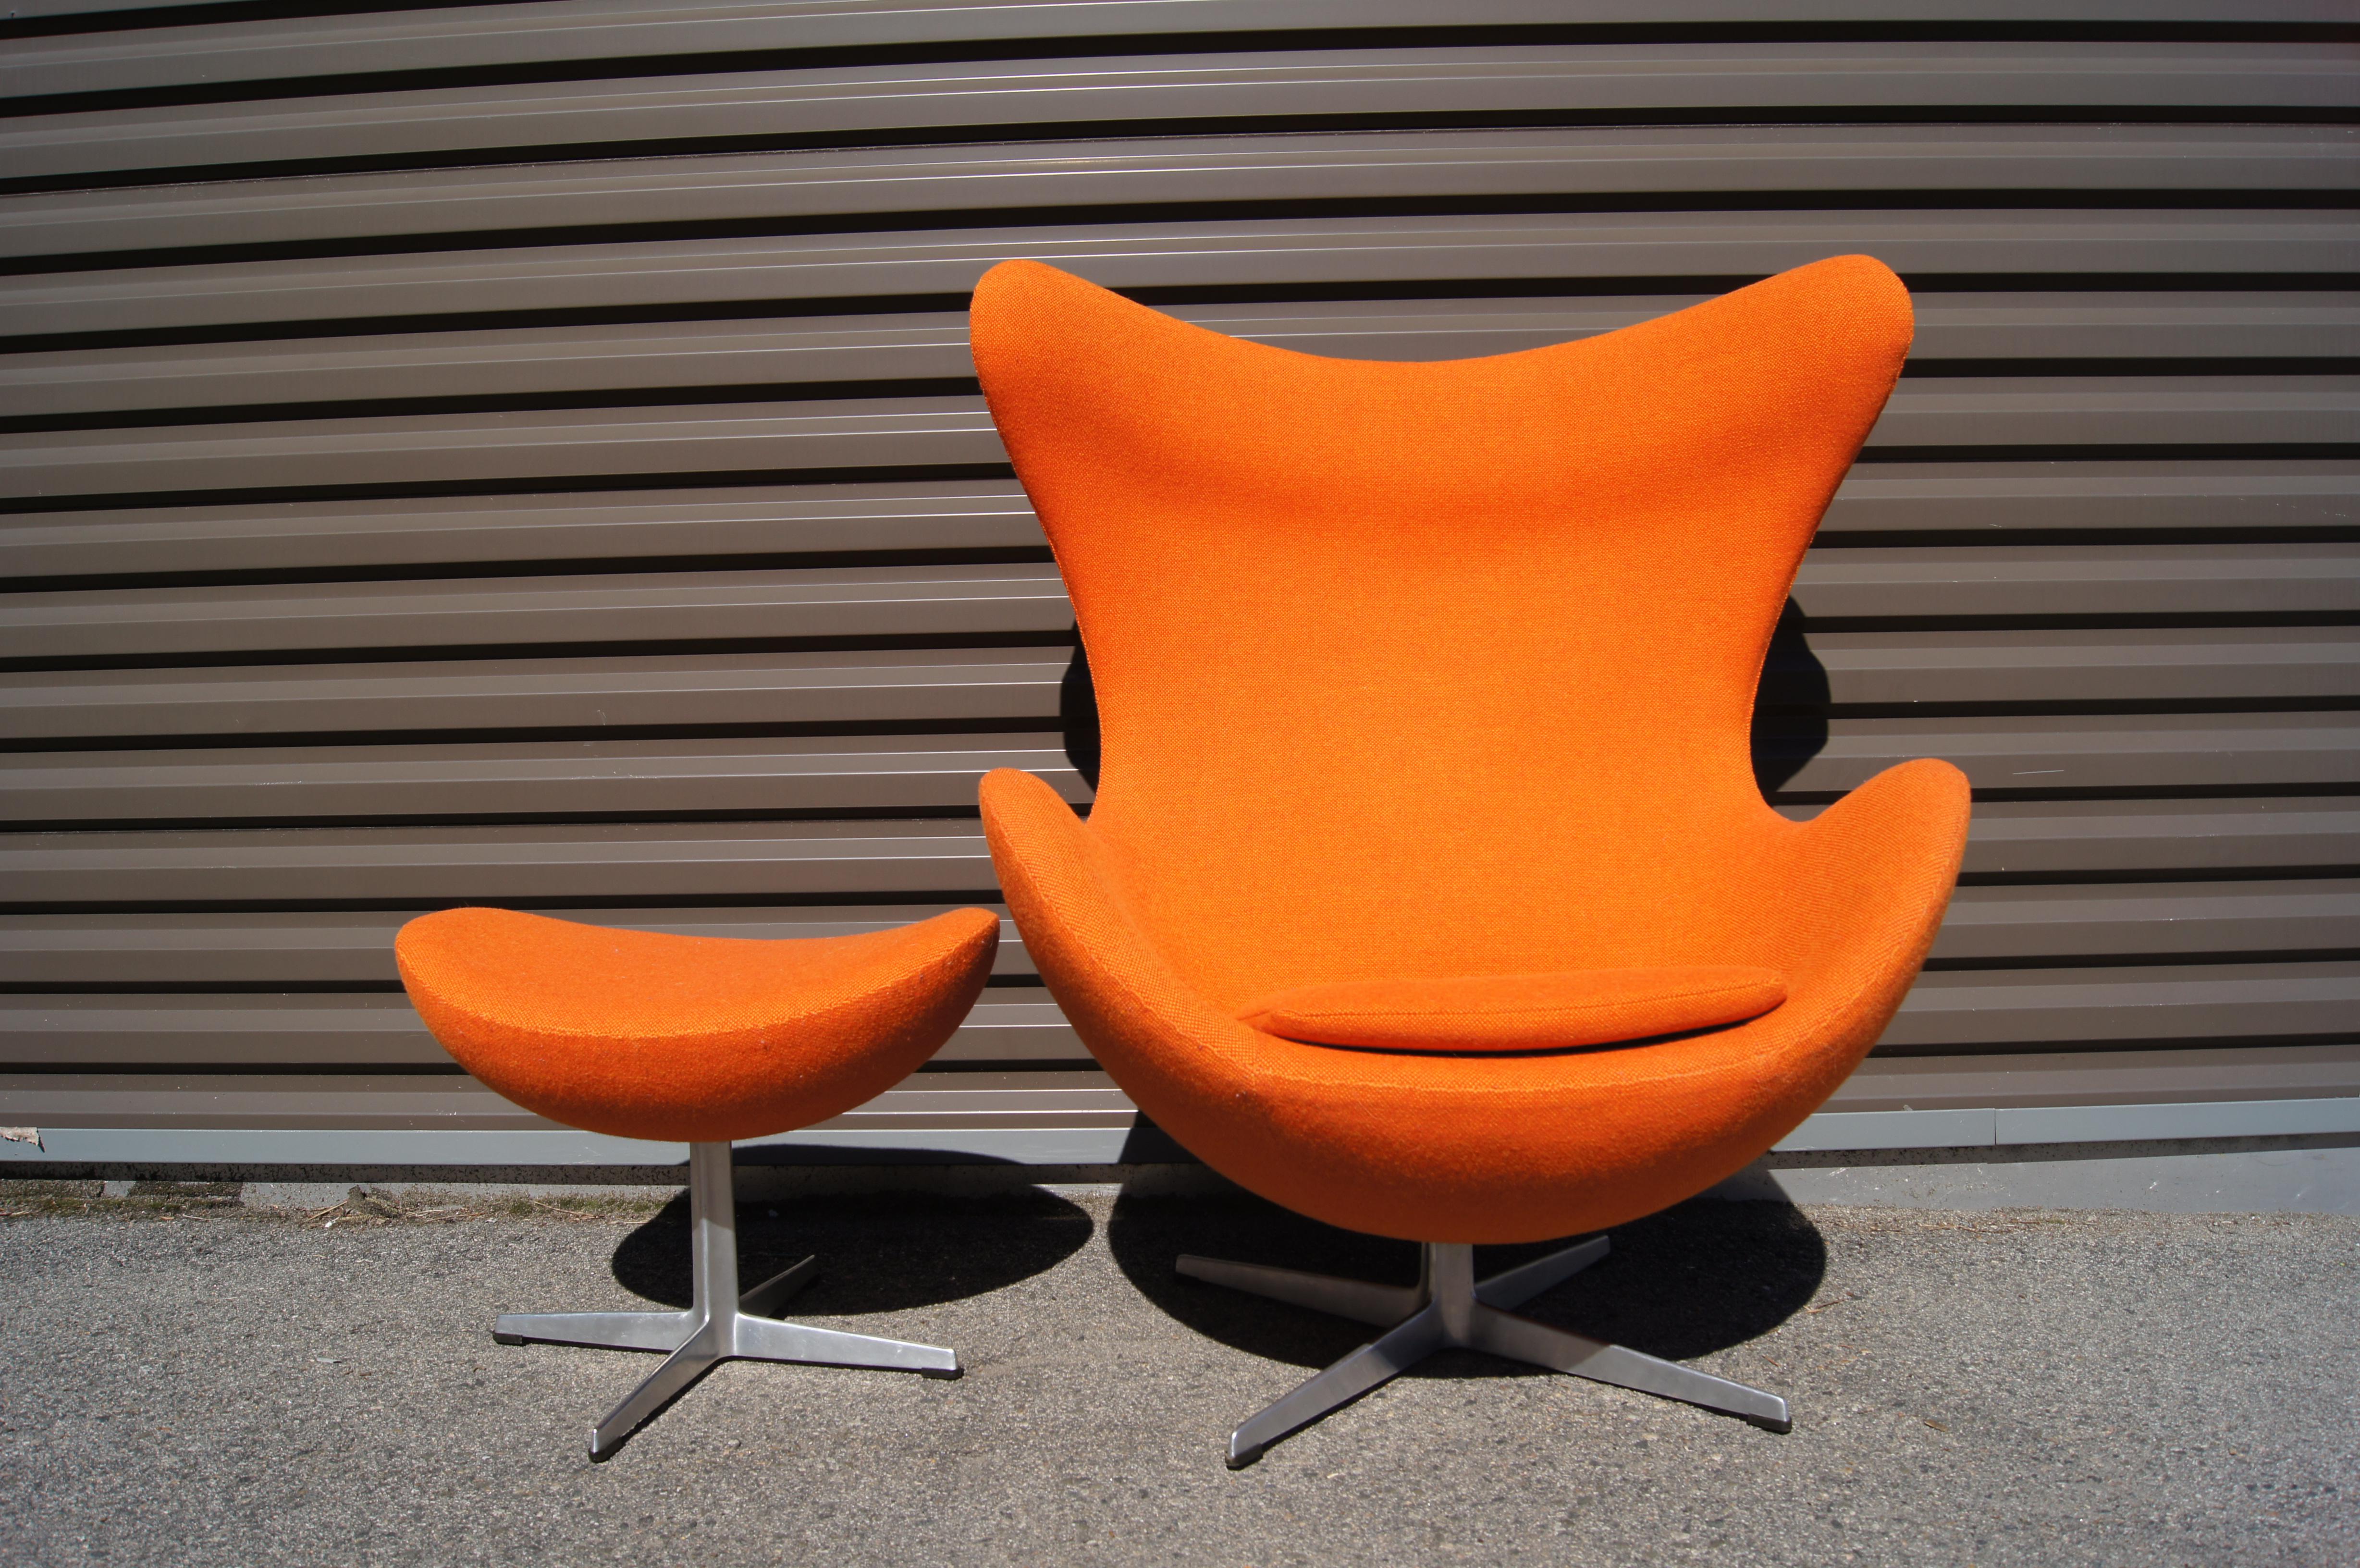 egg chair with ottoman -china -b2b -forum -blog -wikipedia -.cn -.gov -alibaba